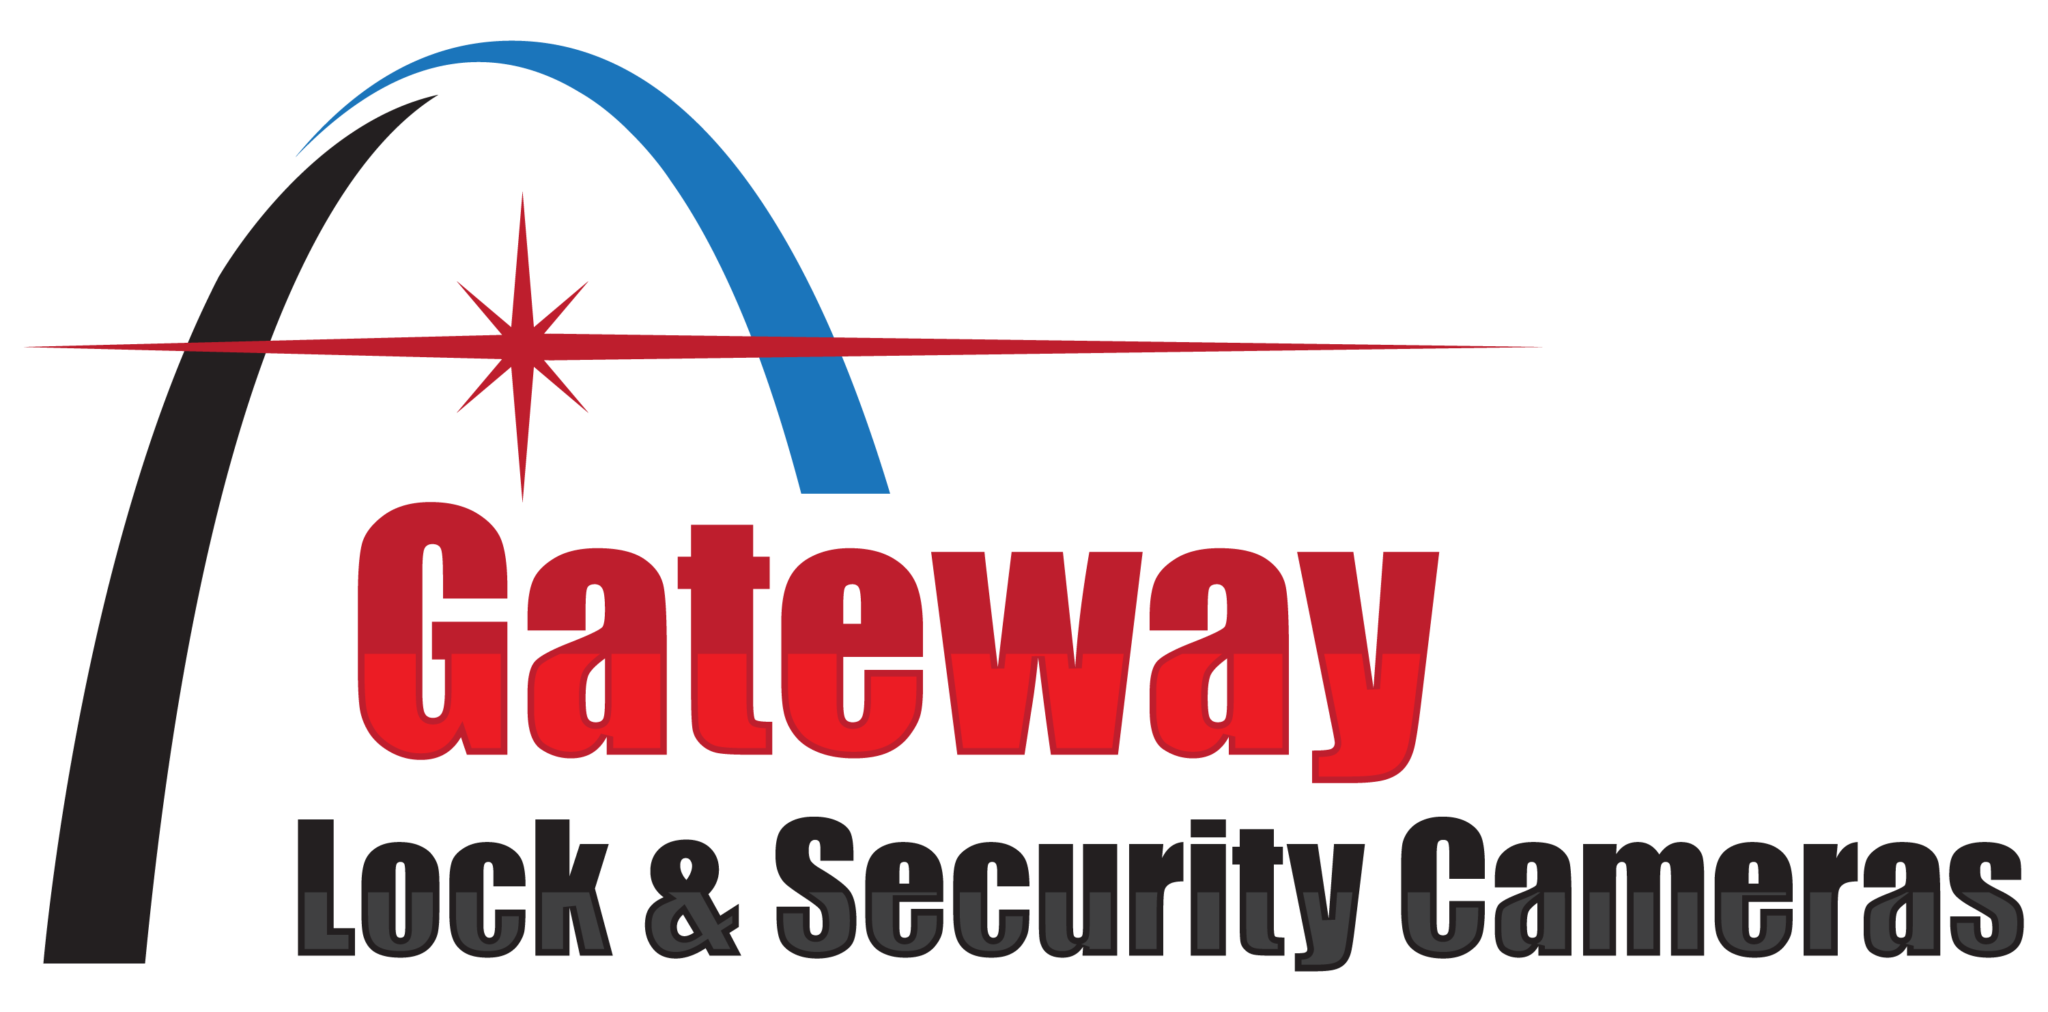 Gateway Lock & Security Cameras